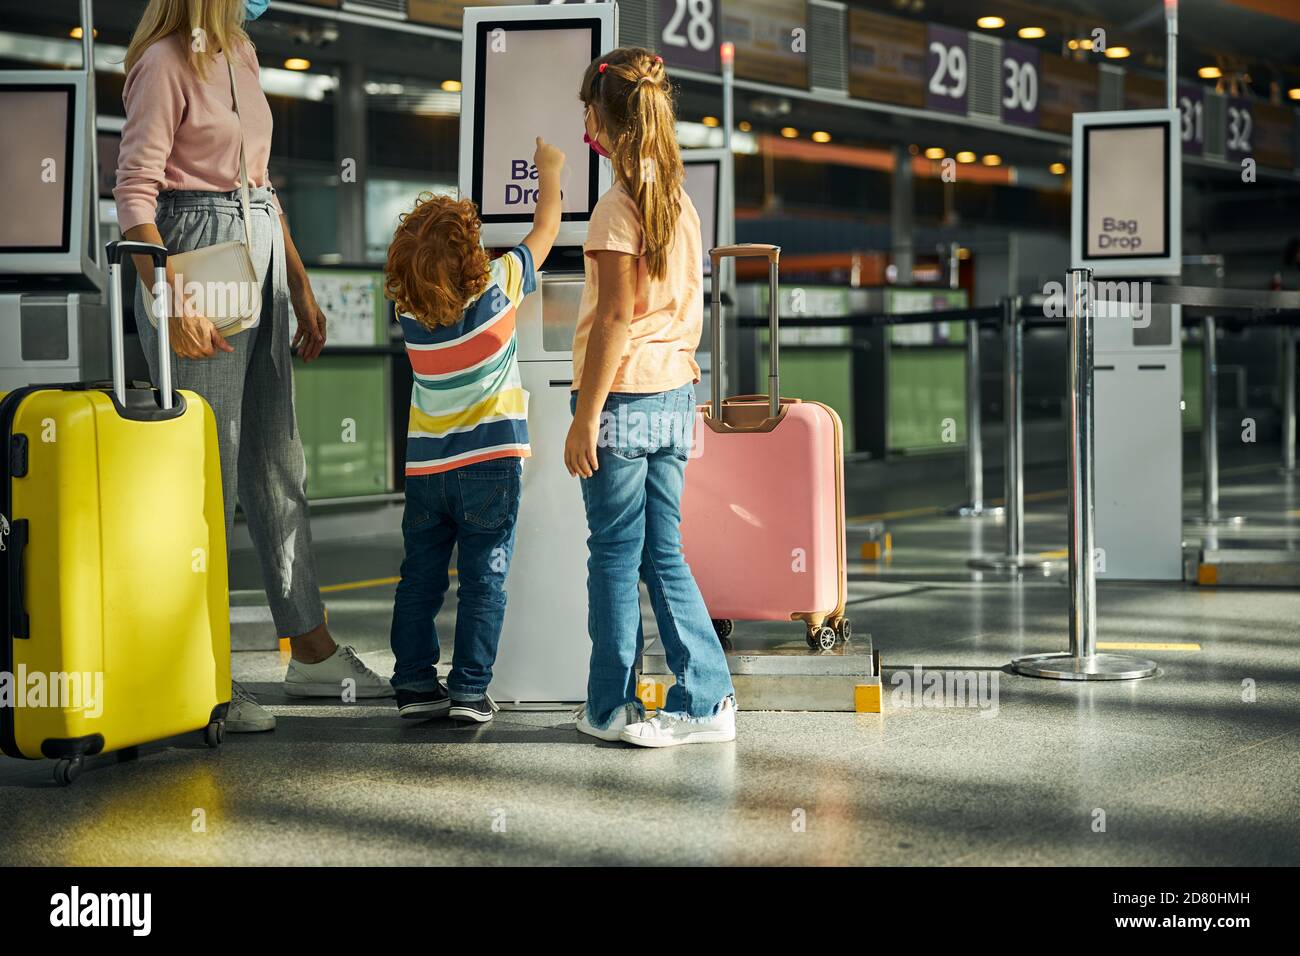 Curious boy touching a screen of a bag drop kiosk Stock Photo